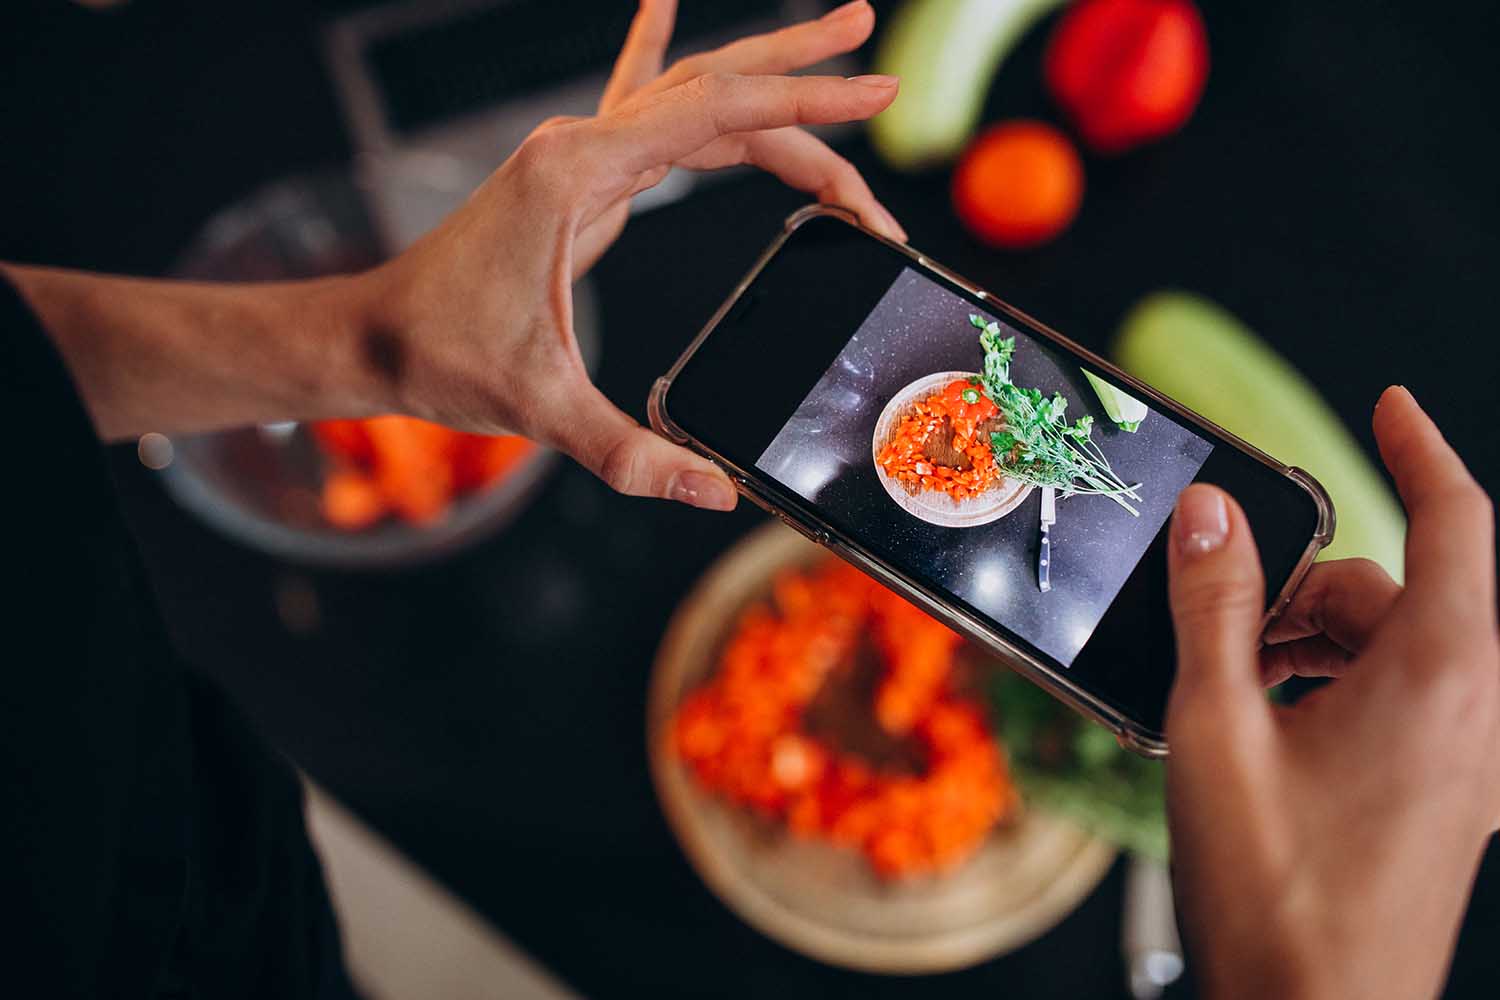 Food Photography Skills for Social Media